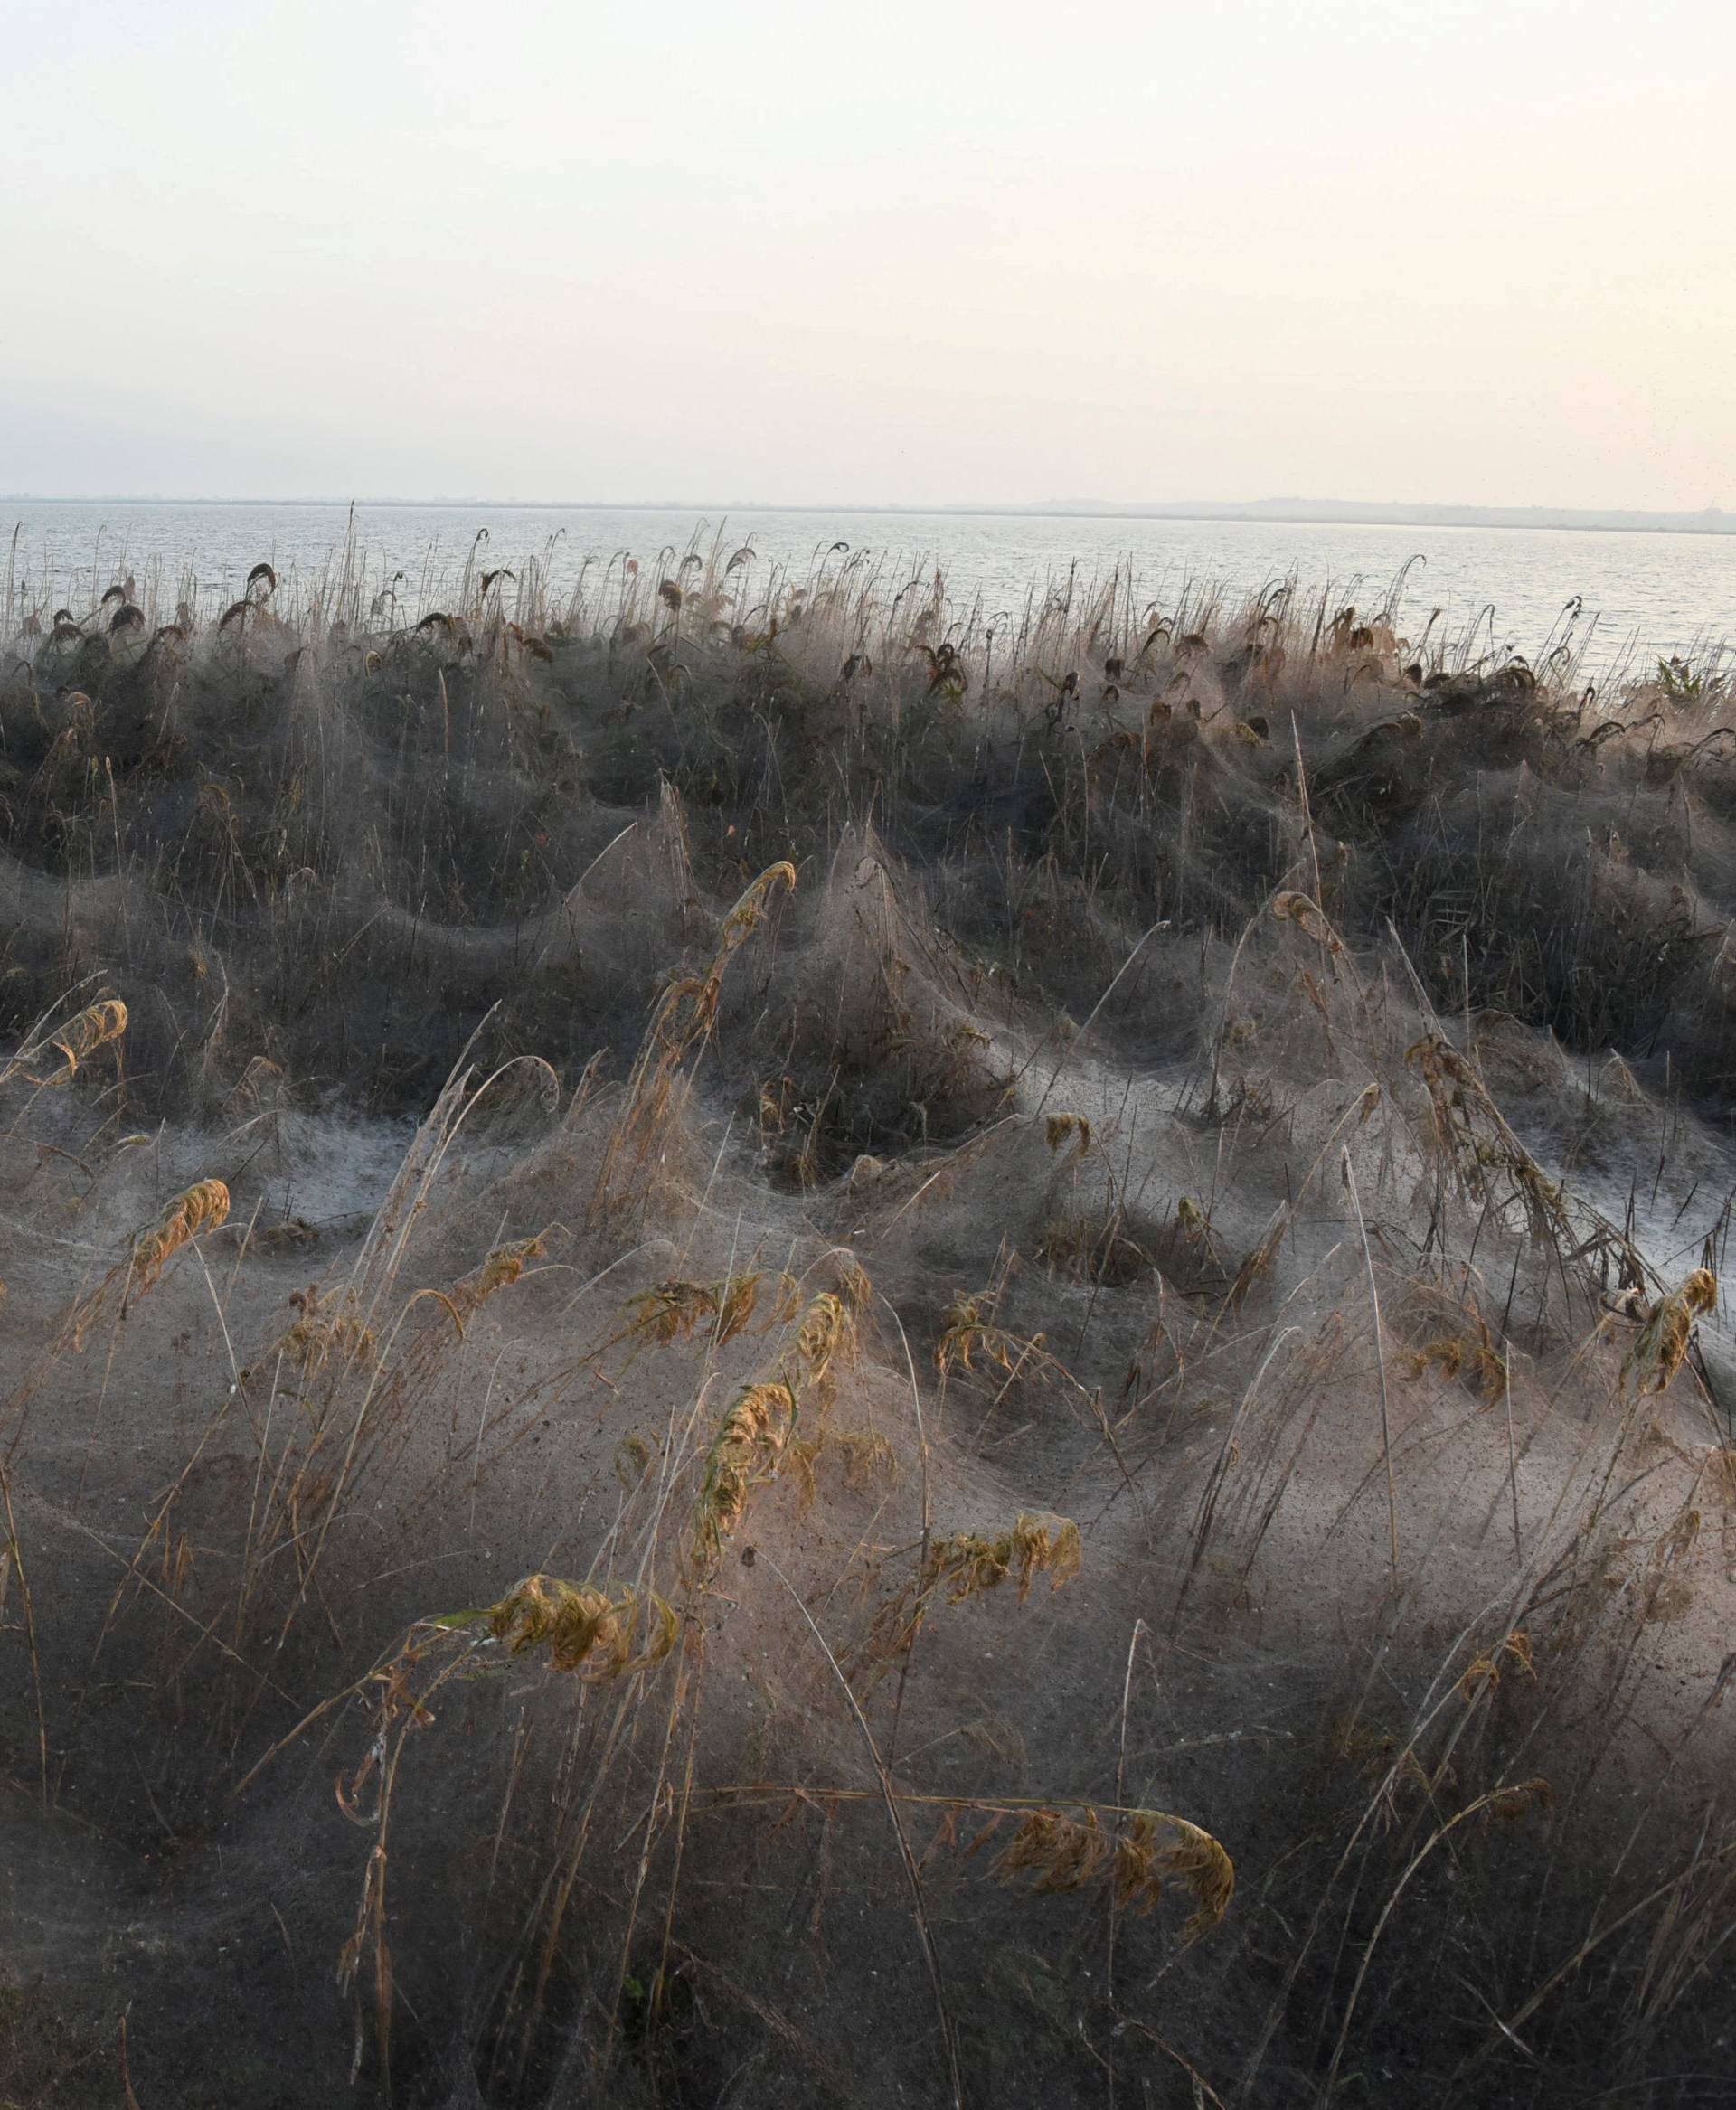 Spider webs blanket shrubs at the banks of Lake Vistonida